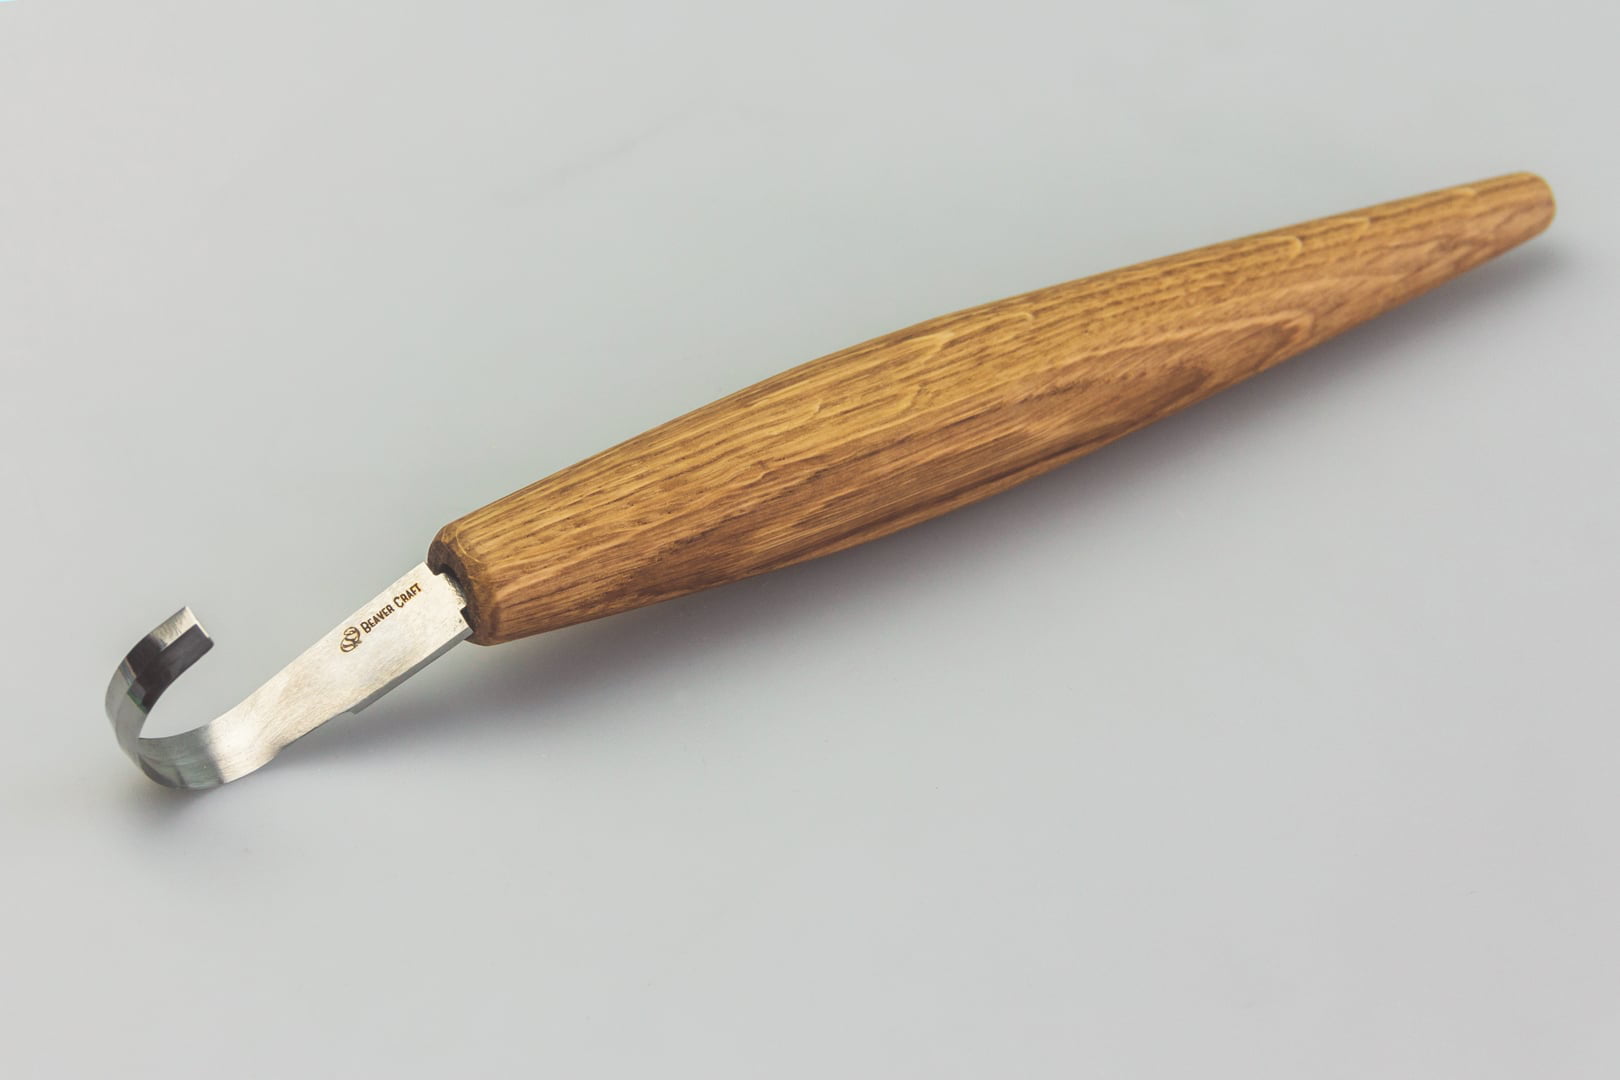 BeaverCraft Hook Knife Wood Carving SK4s Long Knives Spoon Carving Tools 2.4'' Long Handle 7.8'' Spoon Knife Wood Carving Tools Bowl Kuksa Carving